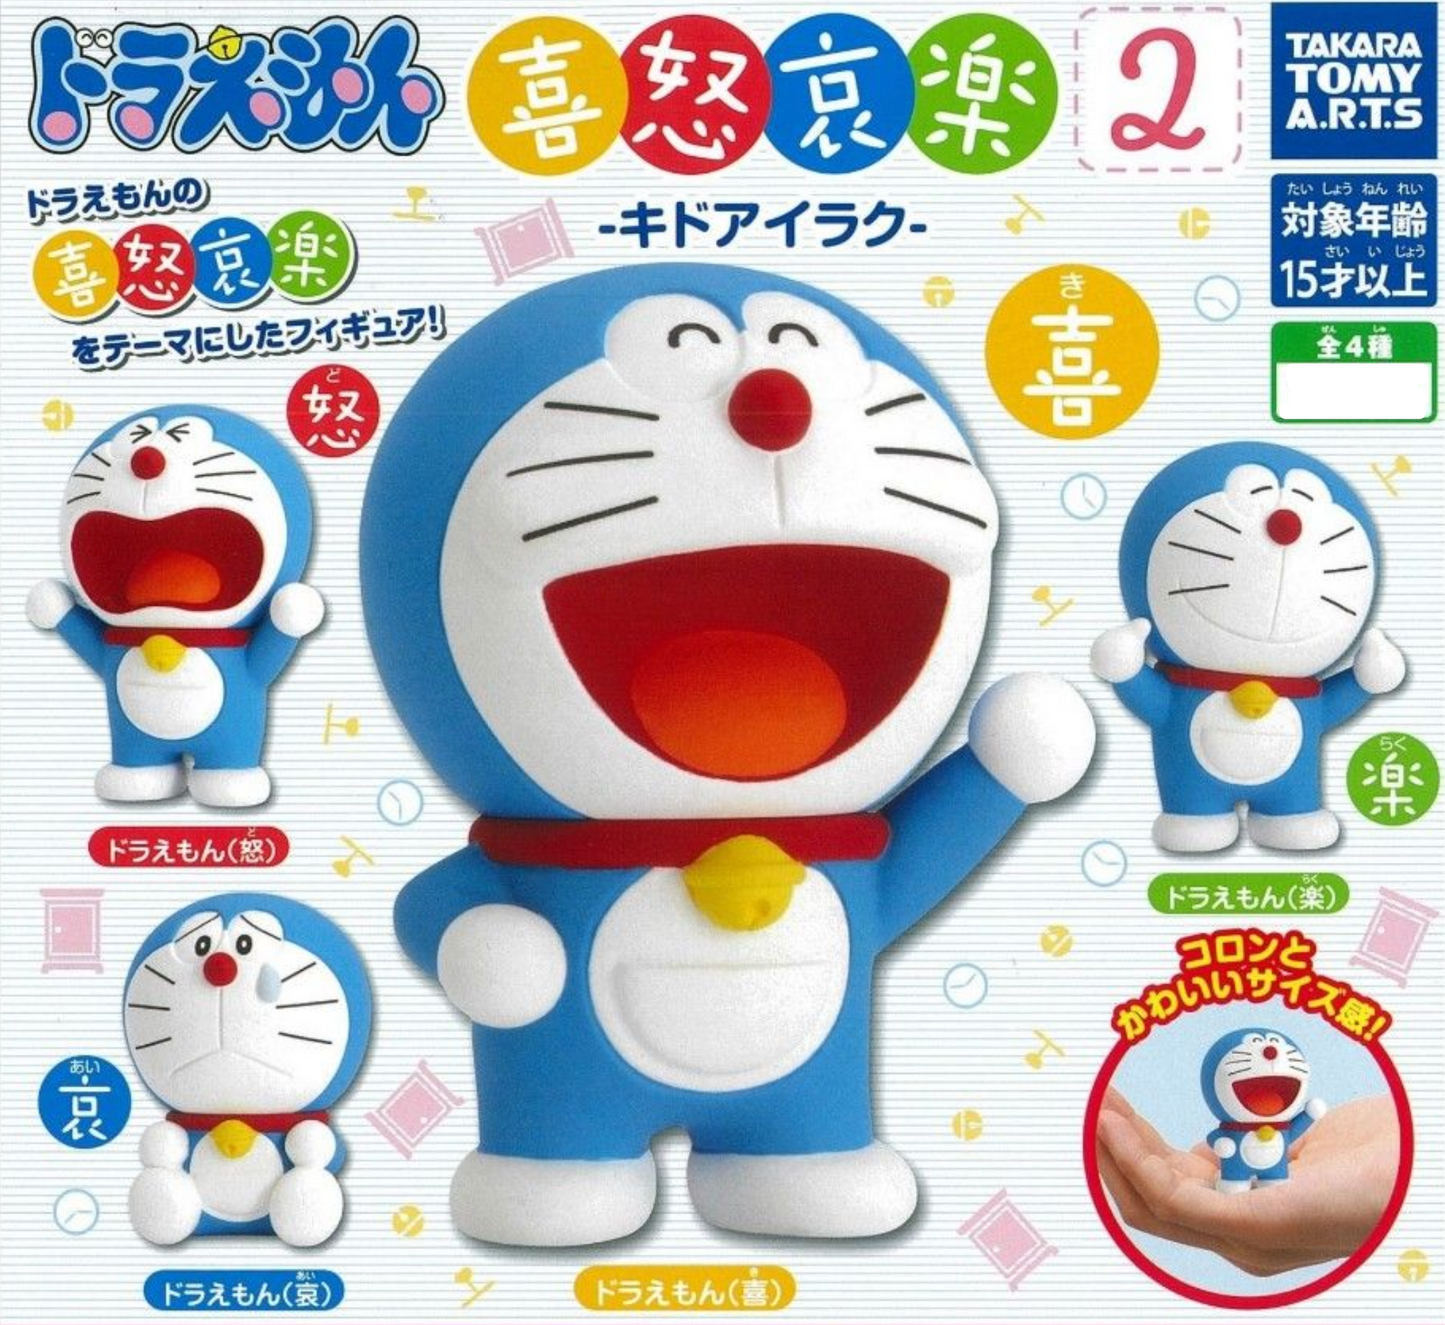 Takara Tomy Capsule Toy Doraemon Emotion Vol.2 Gashapon